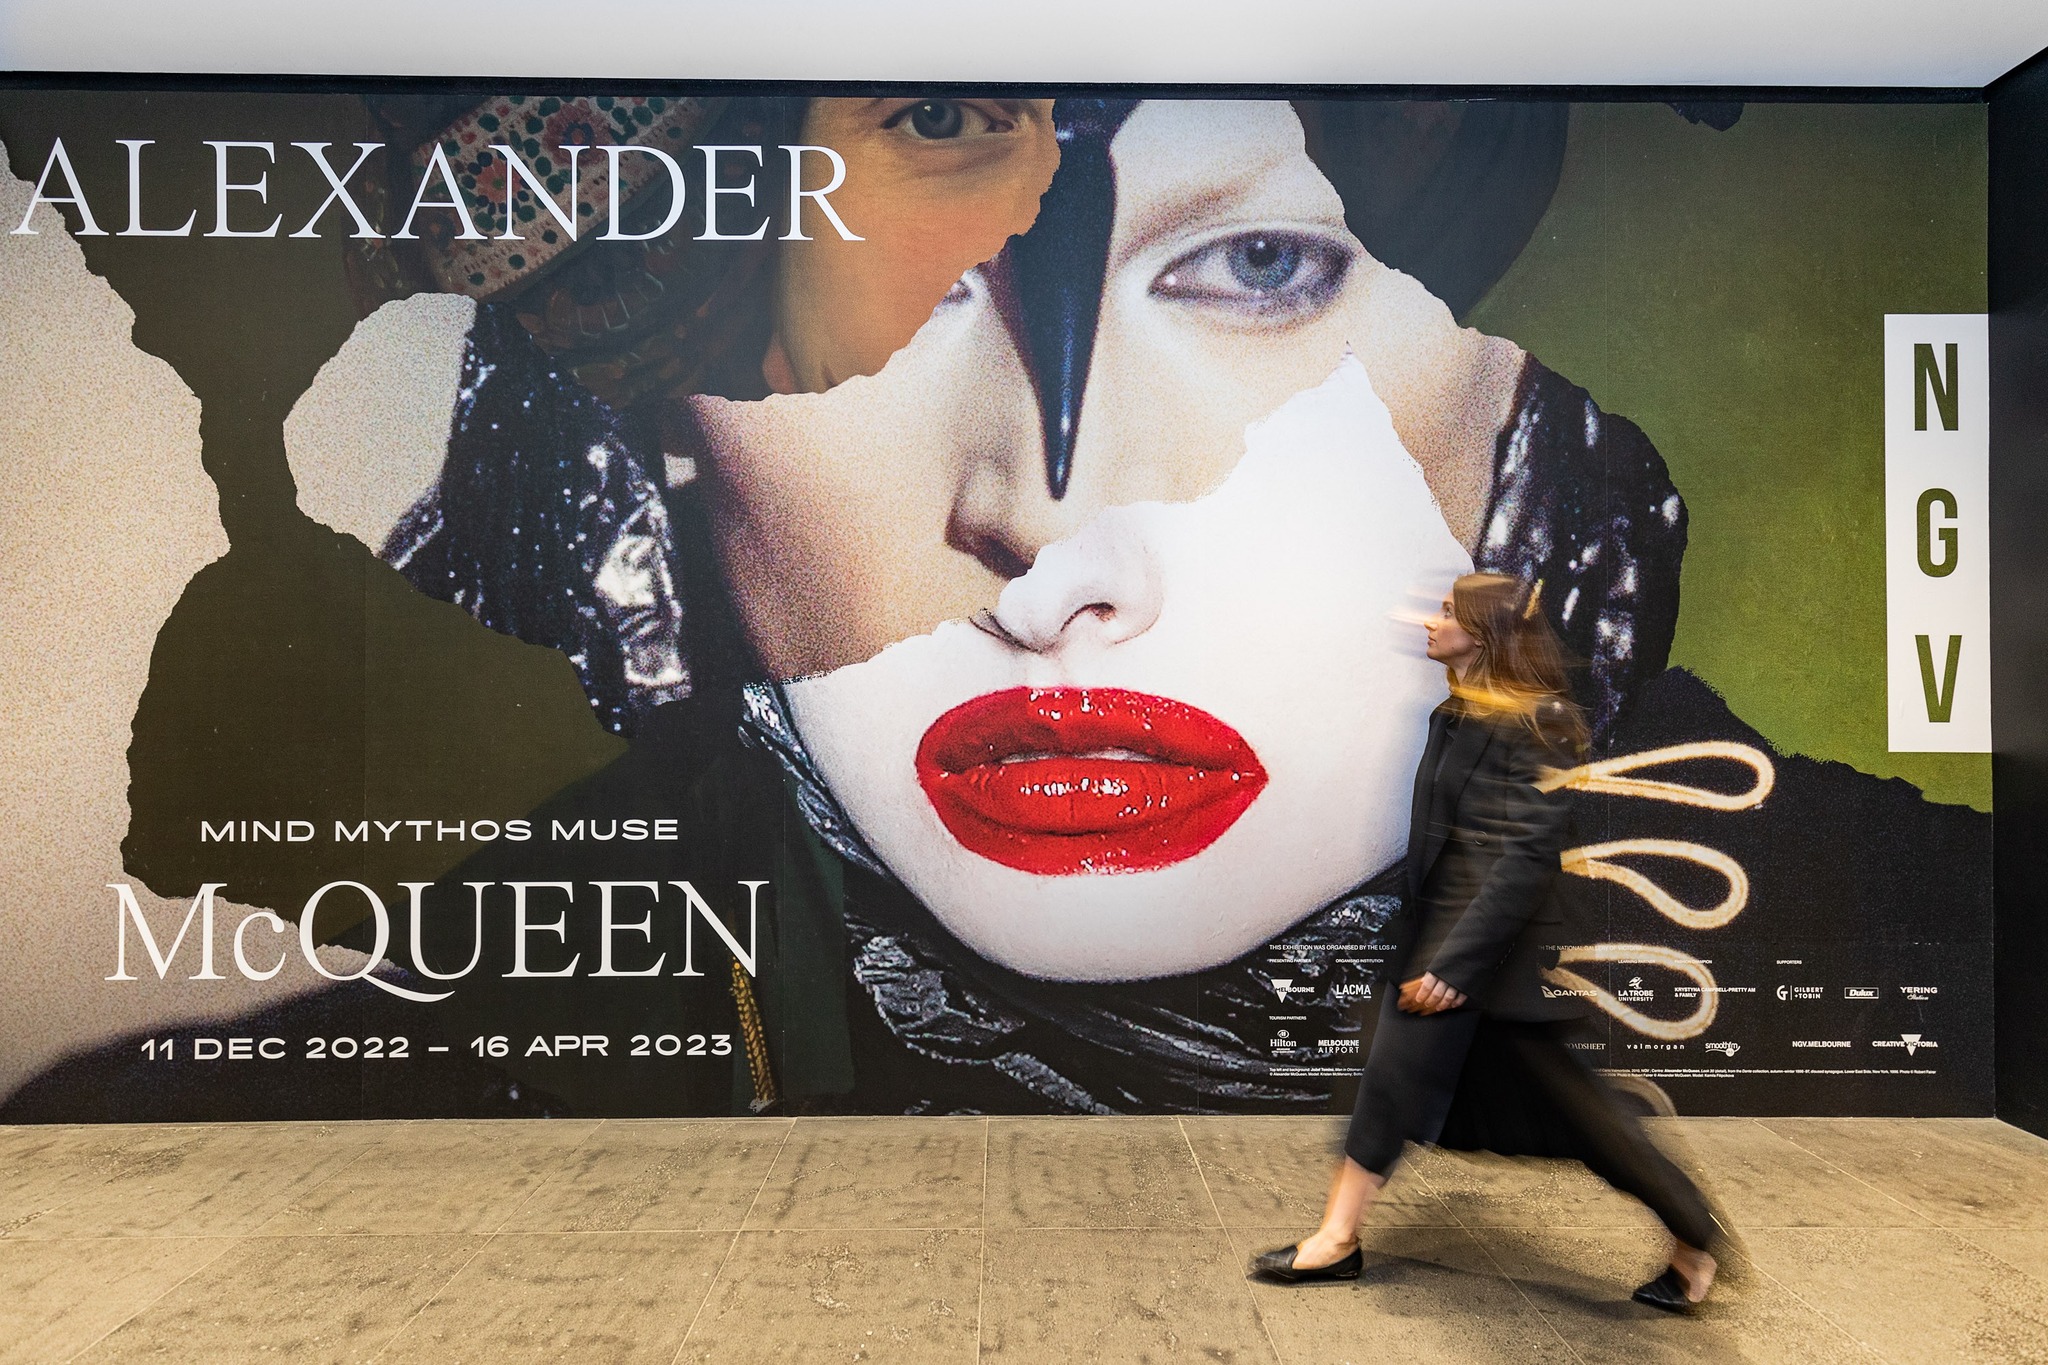 Alexander McQueen exhibition in Melbourne will celebrate the